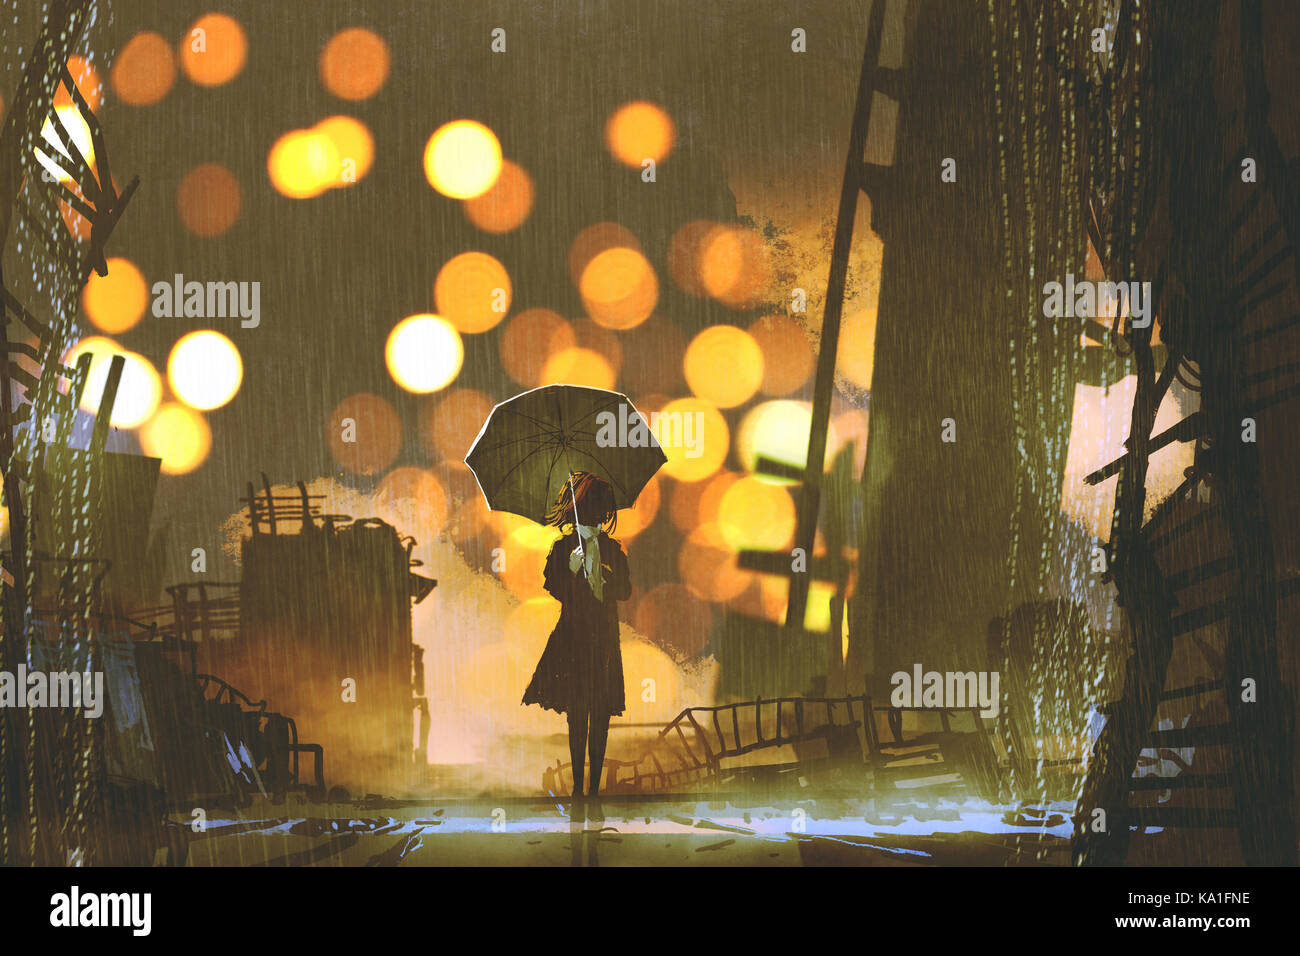 rainy night scene of woman holding umbrella standing alone in abandoned city, digital art style, illustration painting Stock Photo